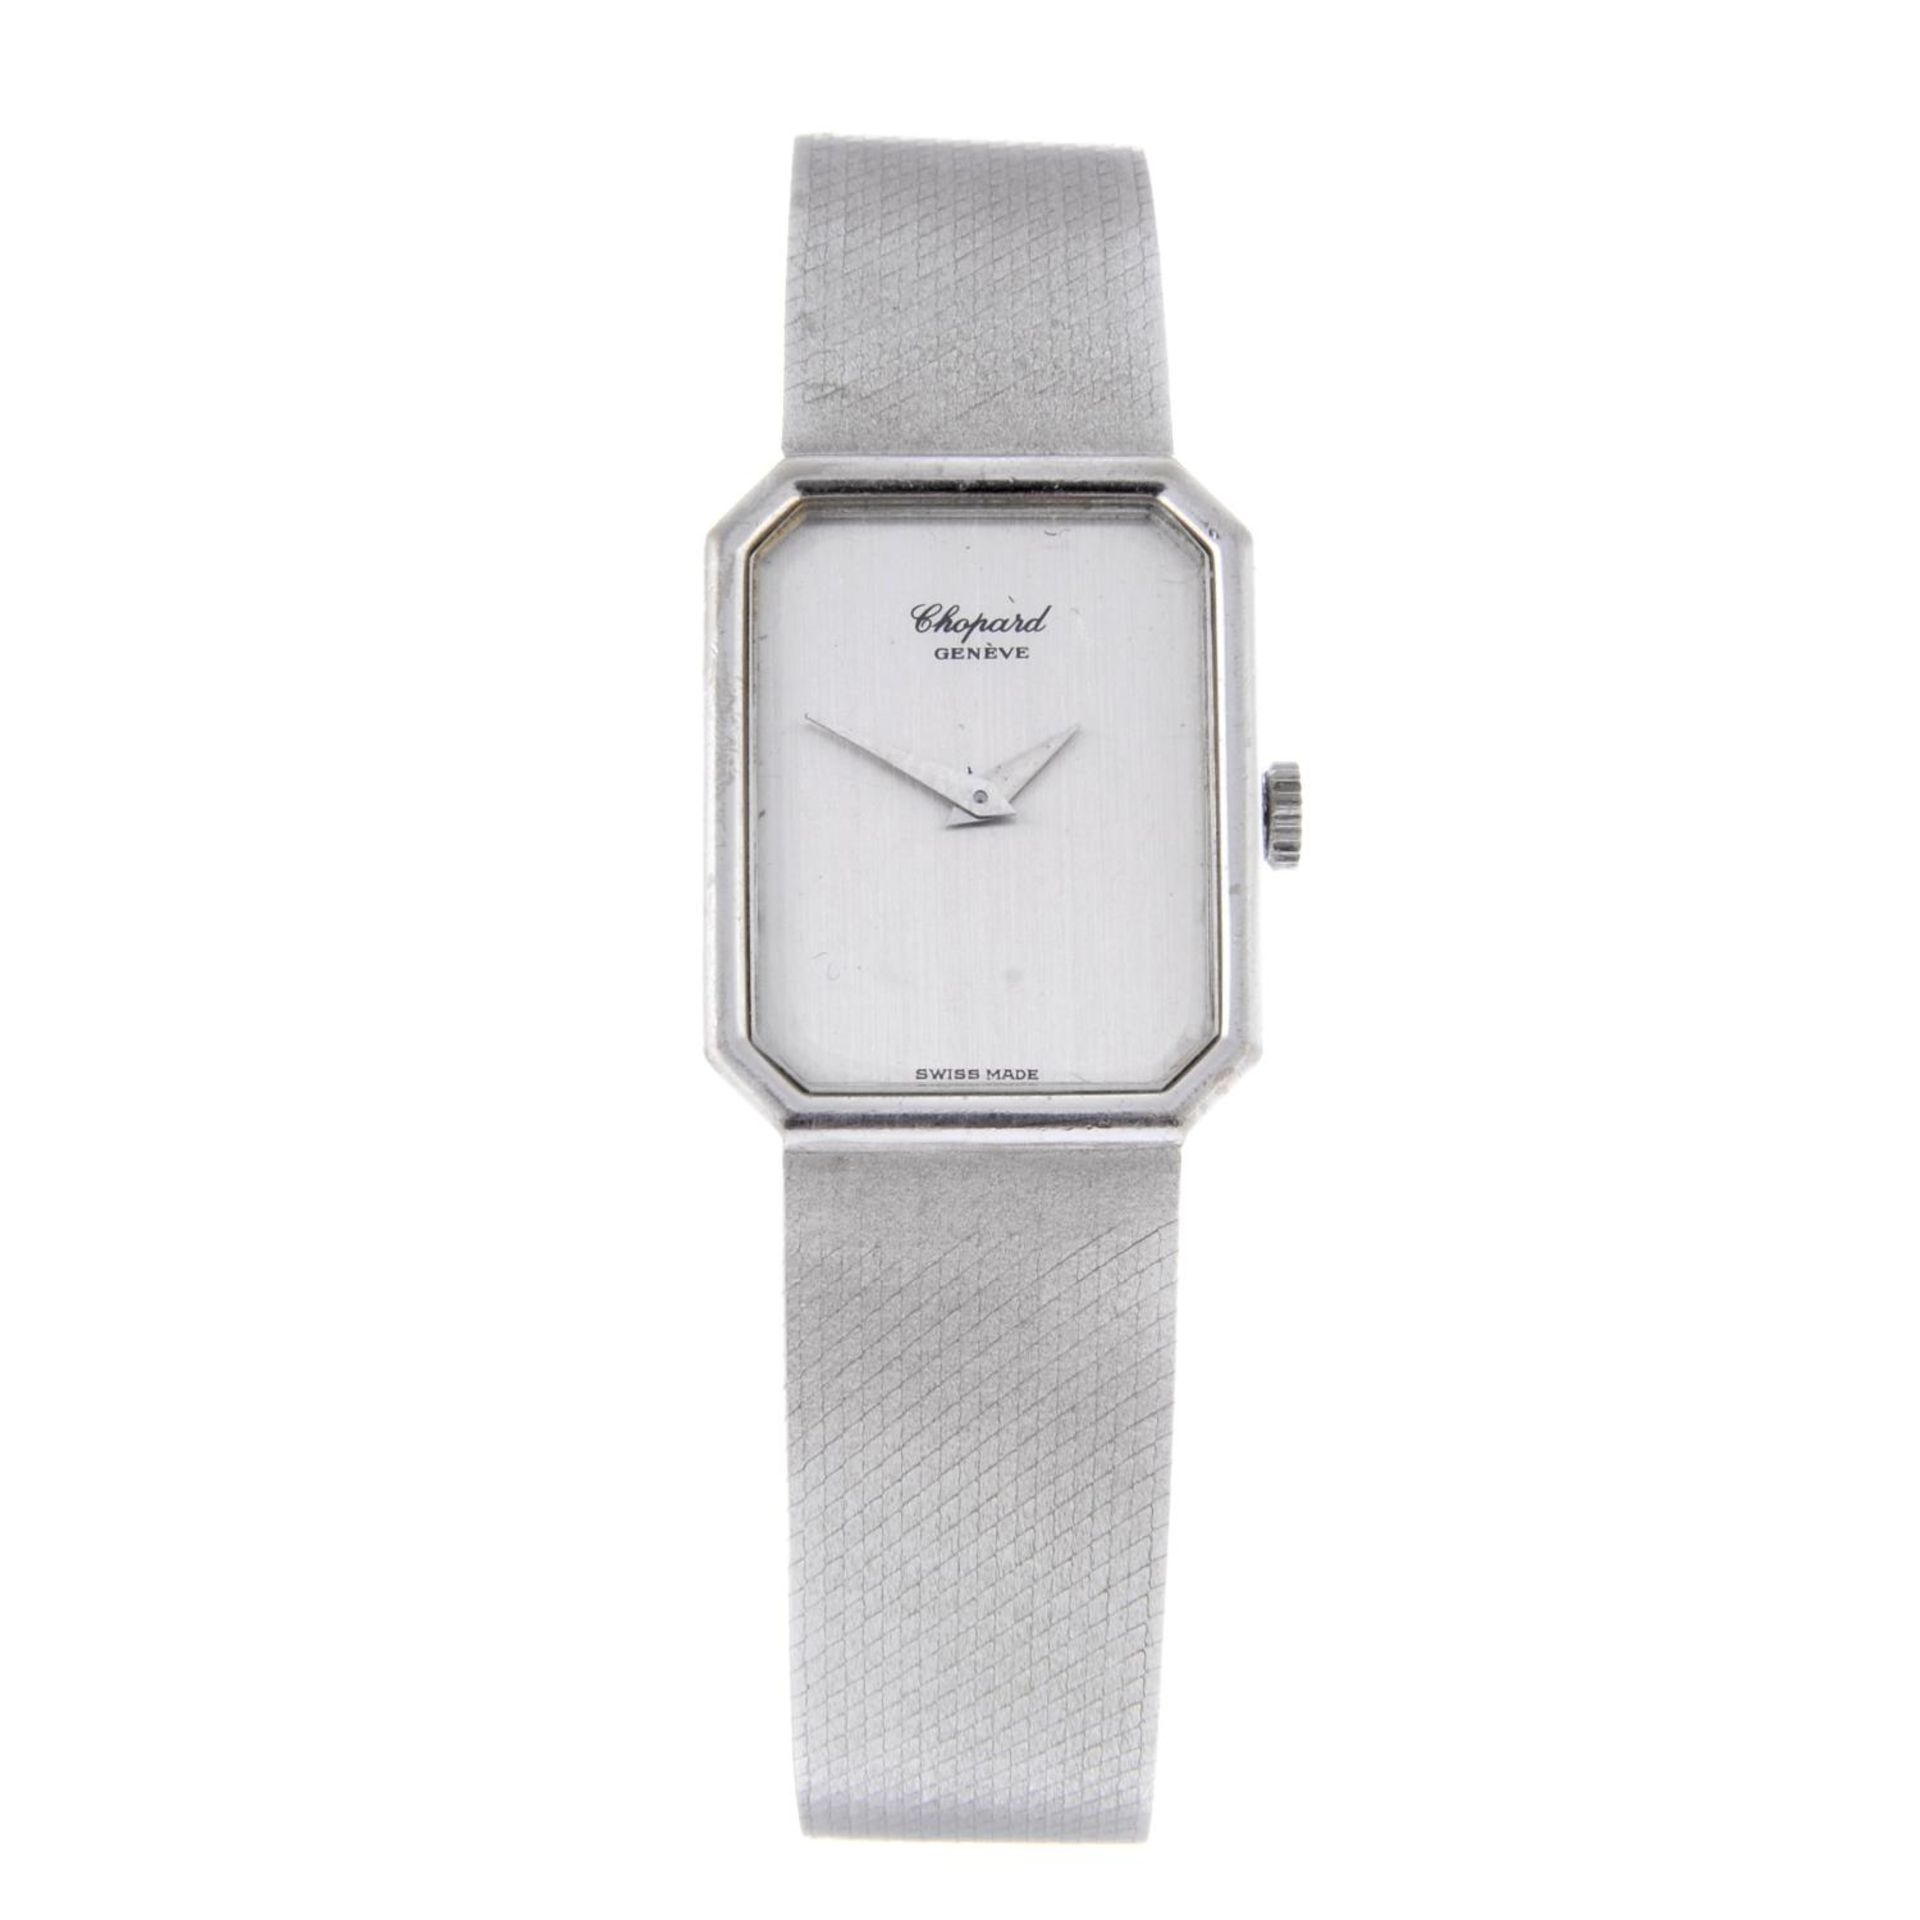 CHOPARD - a lady's bracelet watch.